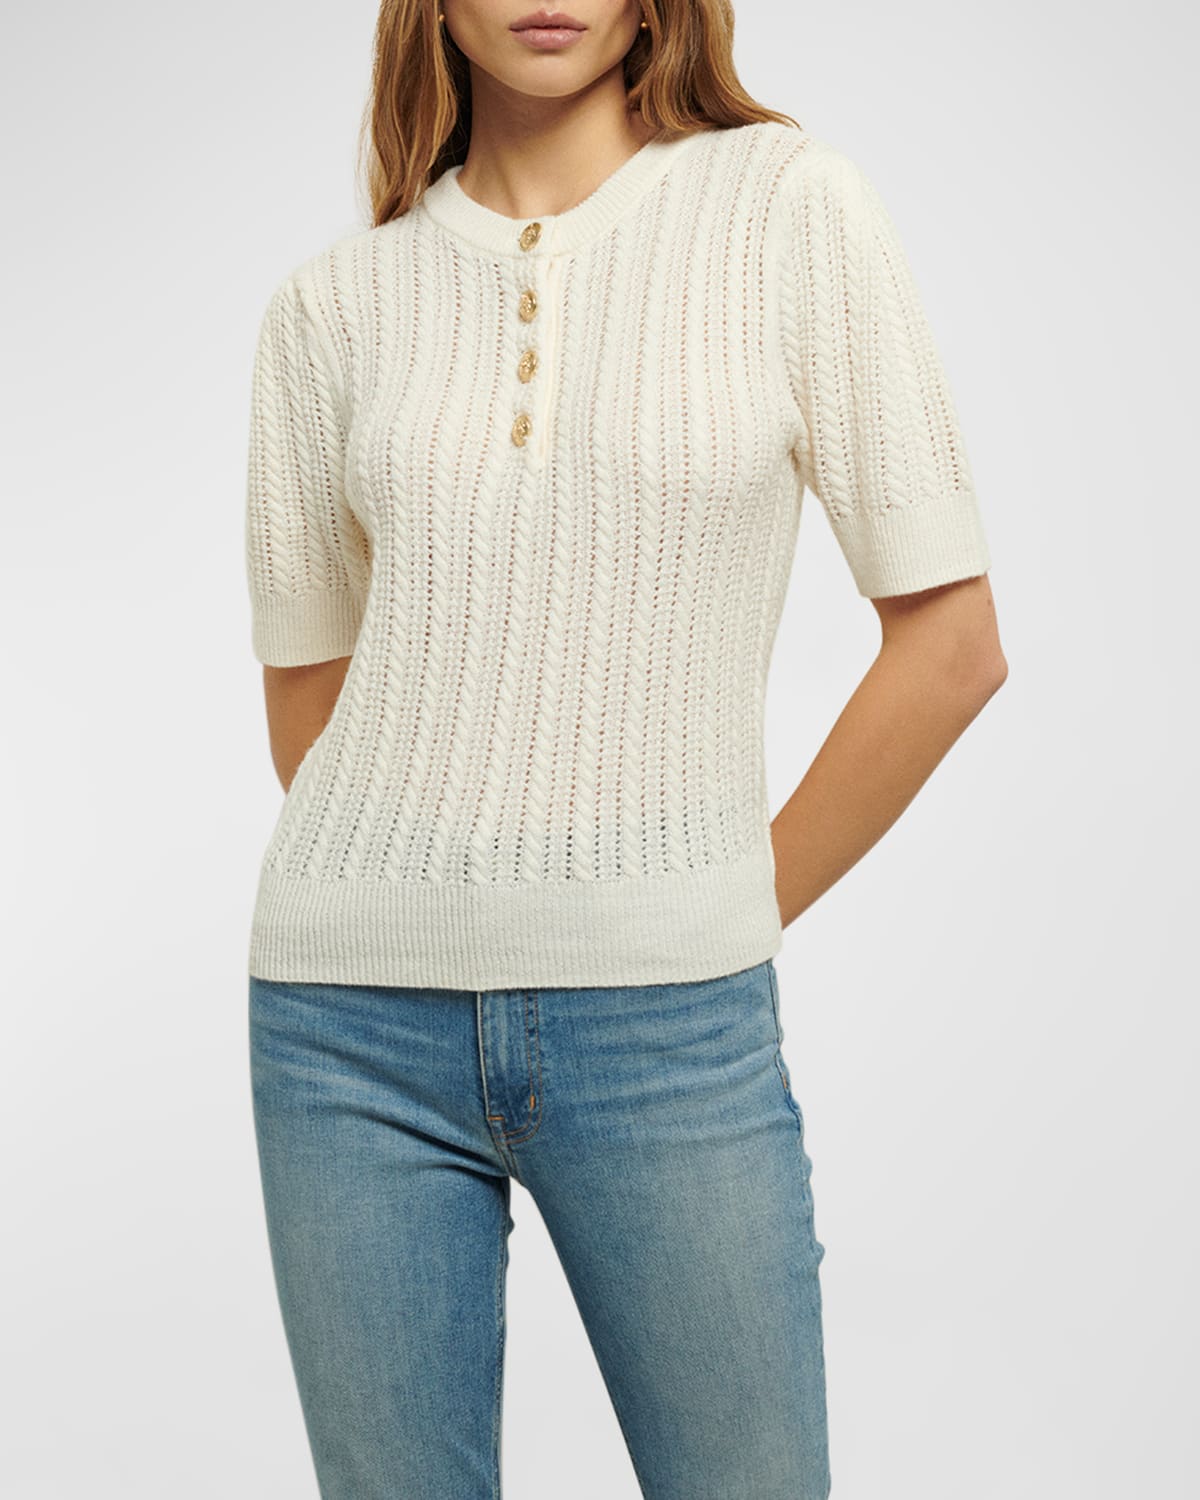 Shea Short Sleeve Sweater